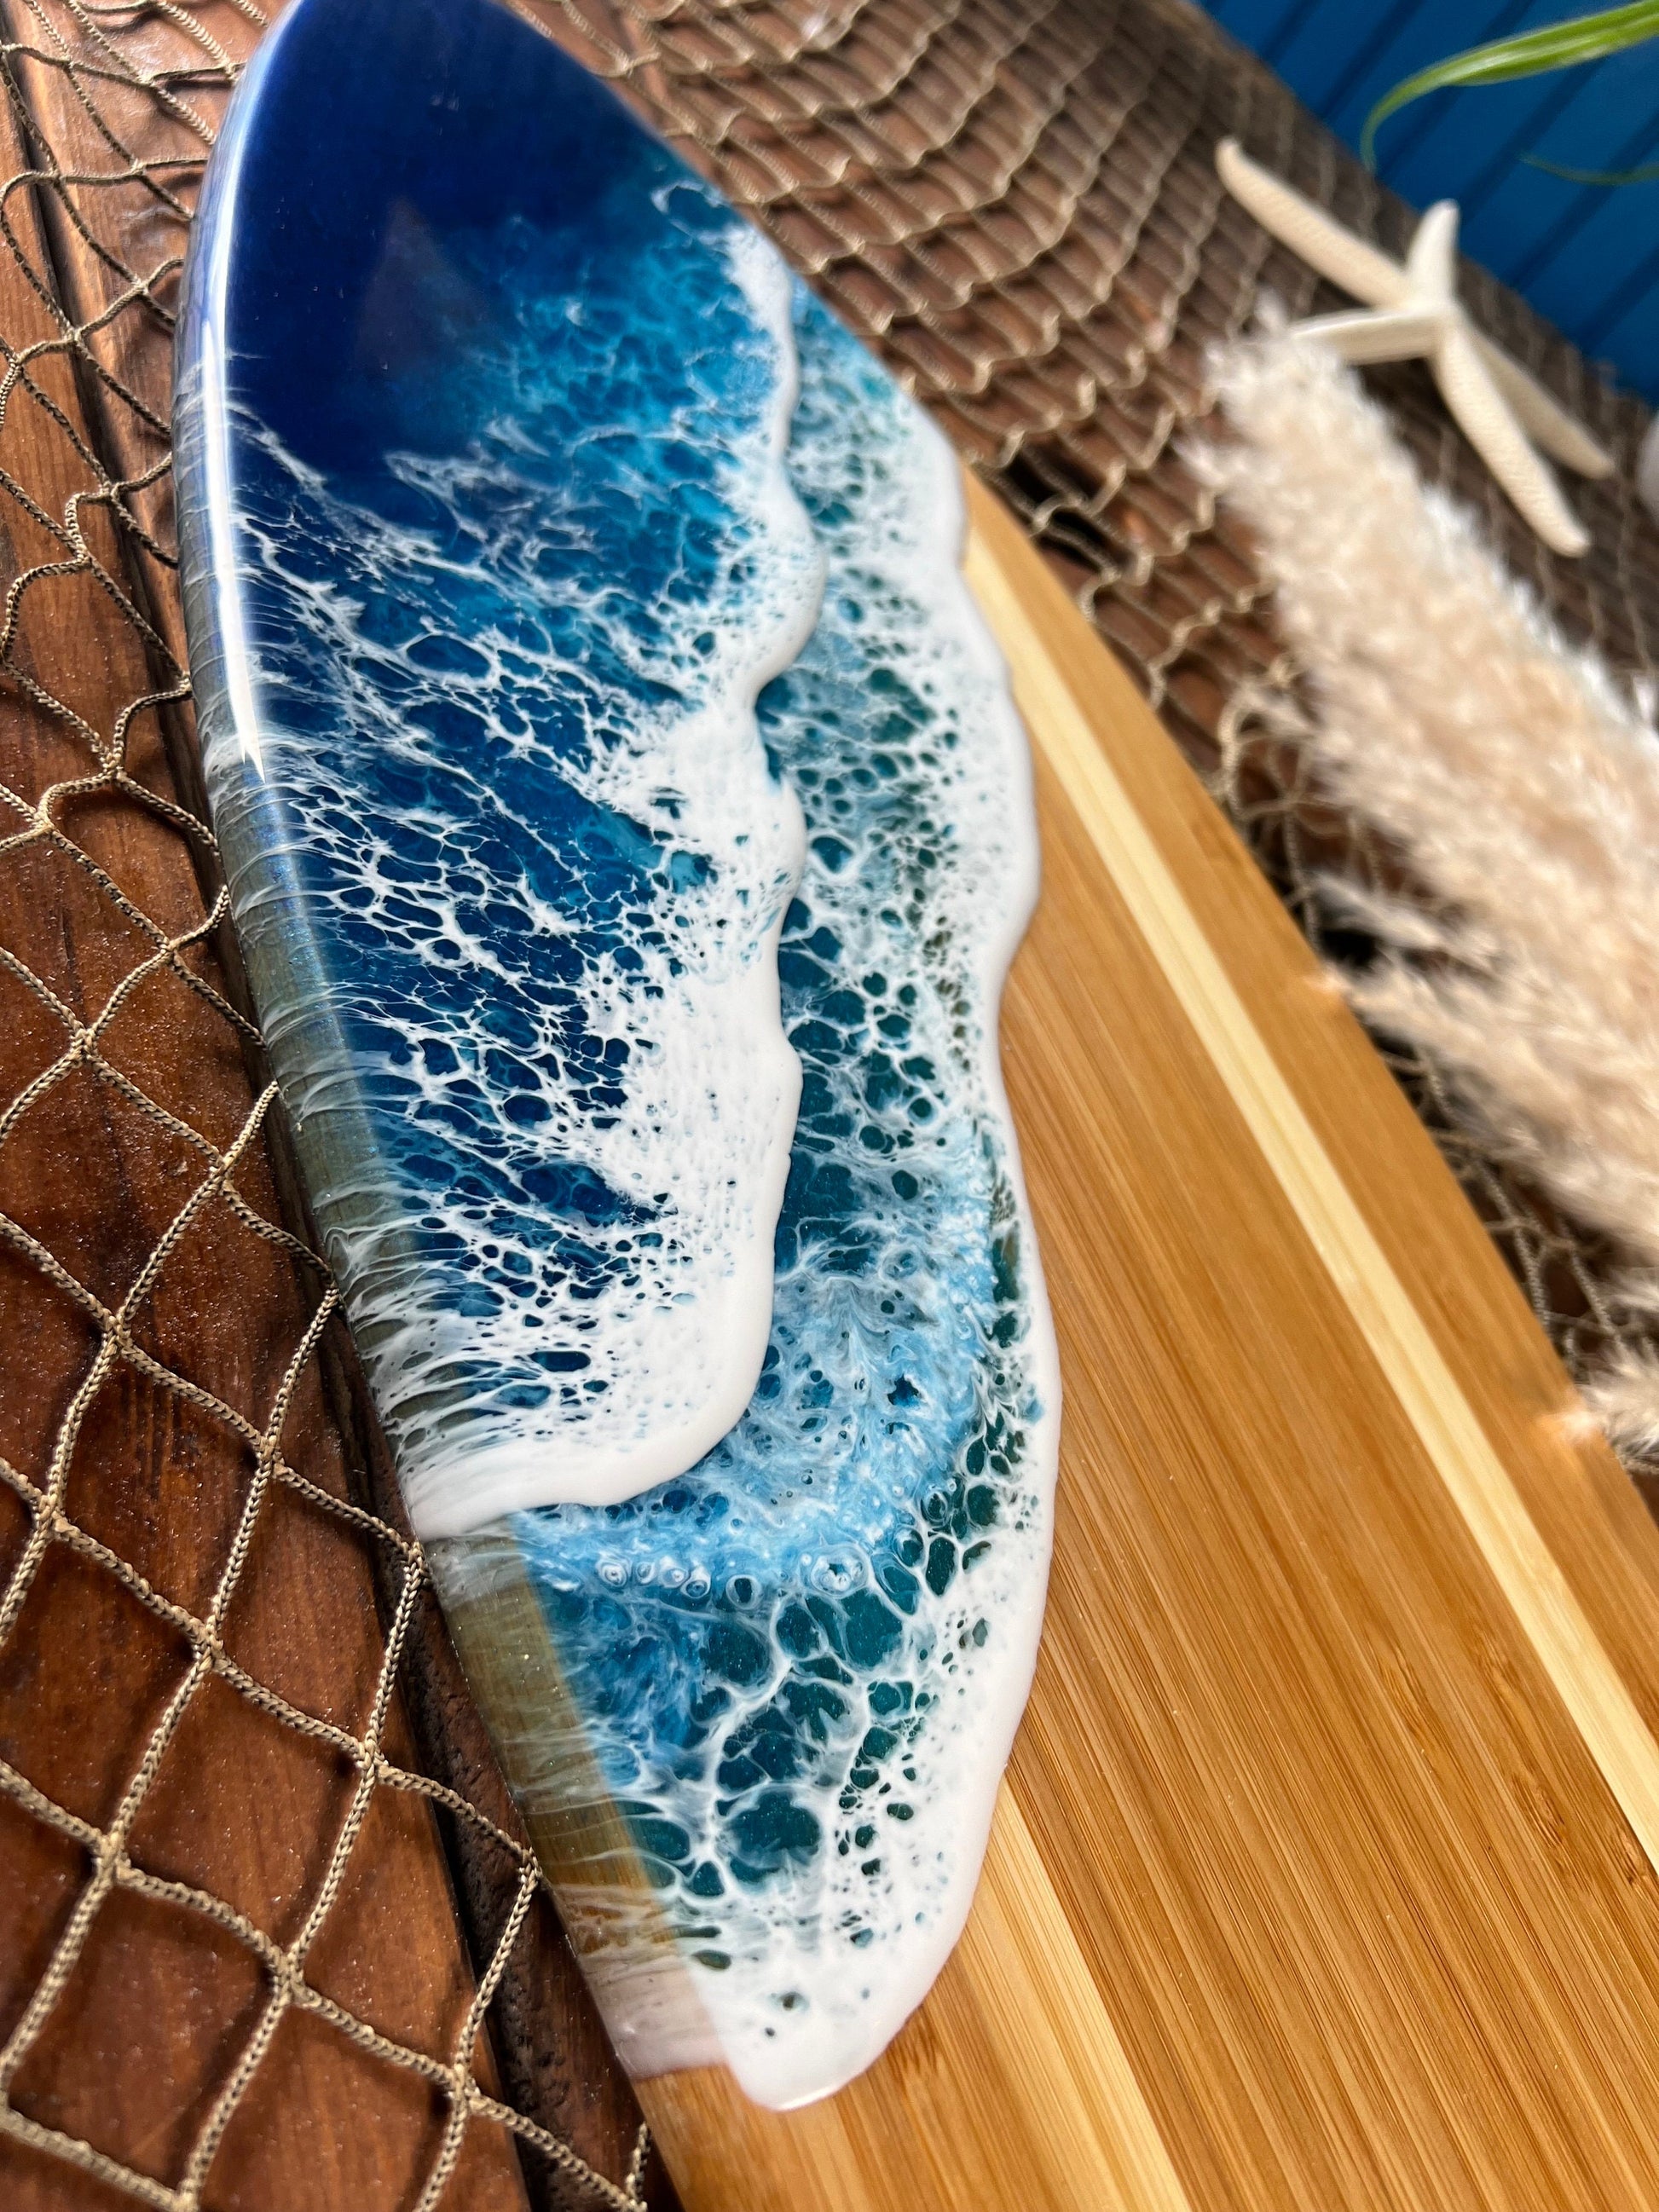 Ocean Waves Resin on Bamboo Surfboard, Serving Tray, Charcuterie Board, Wall Art